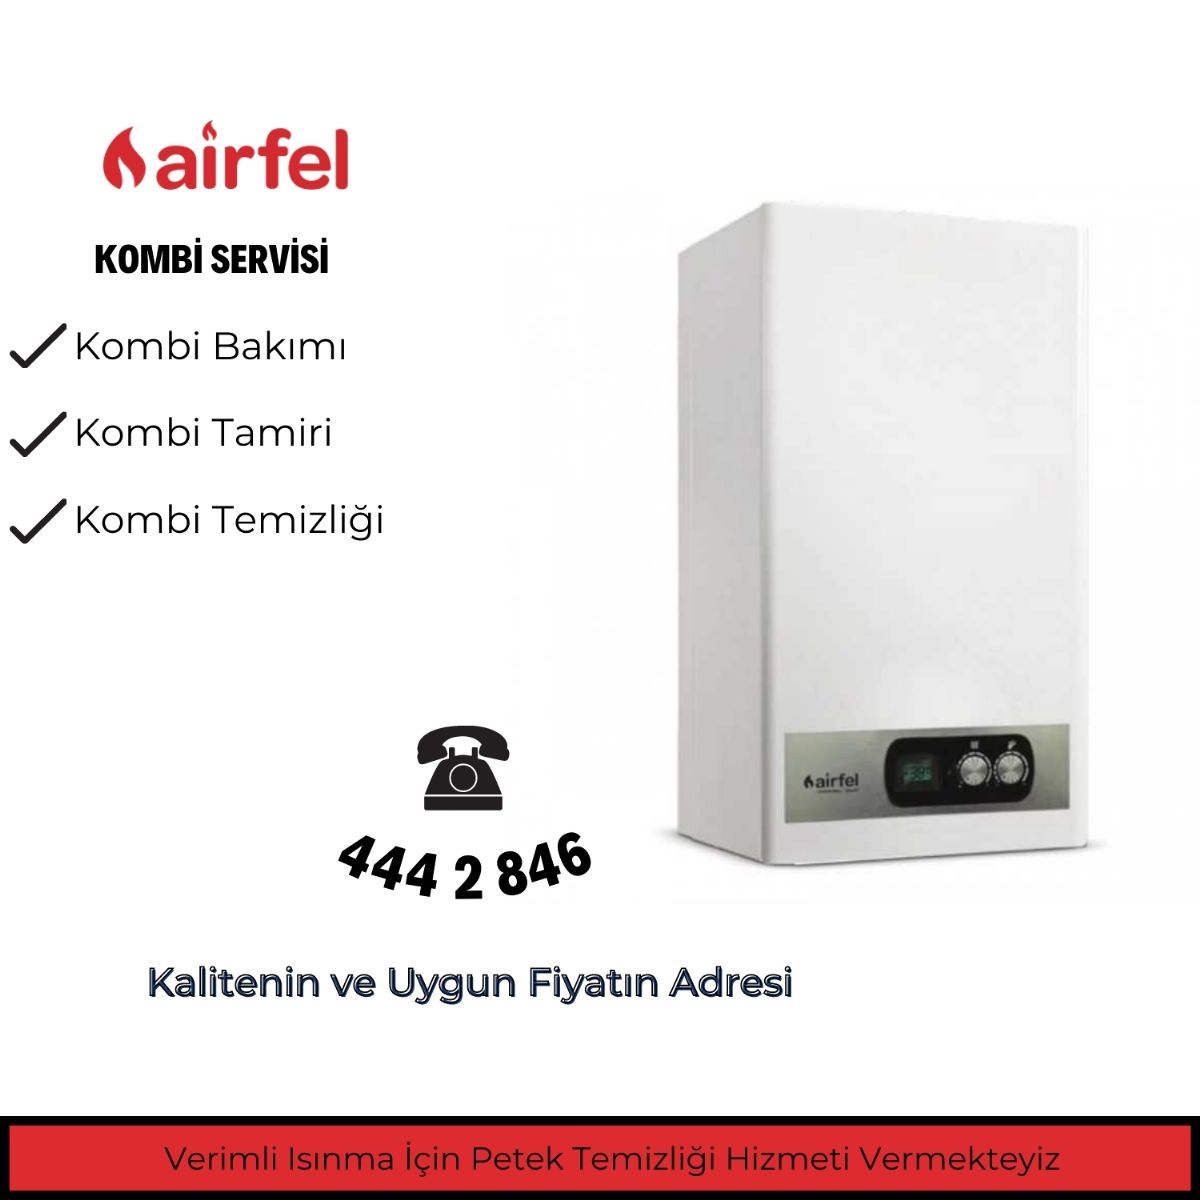 Airfel kombi teknik servis-Yuvam Kombi-444 2 846